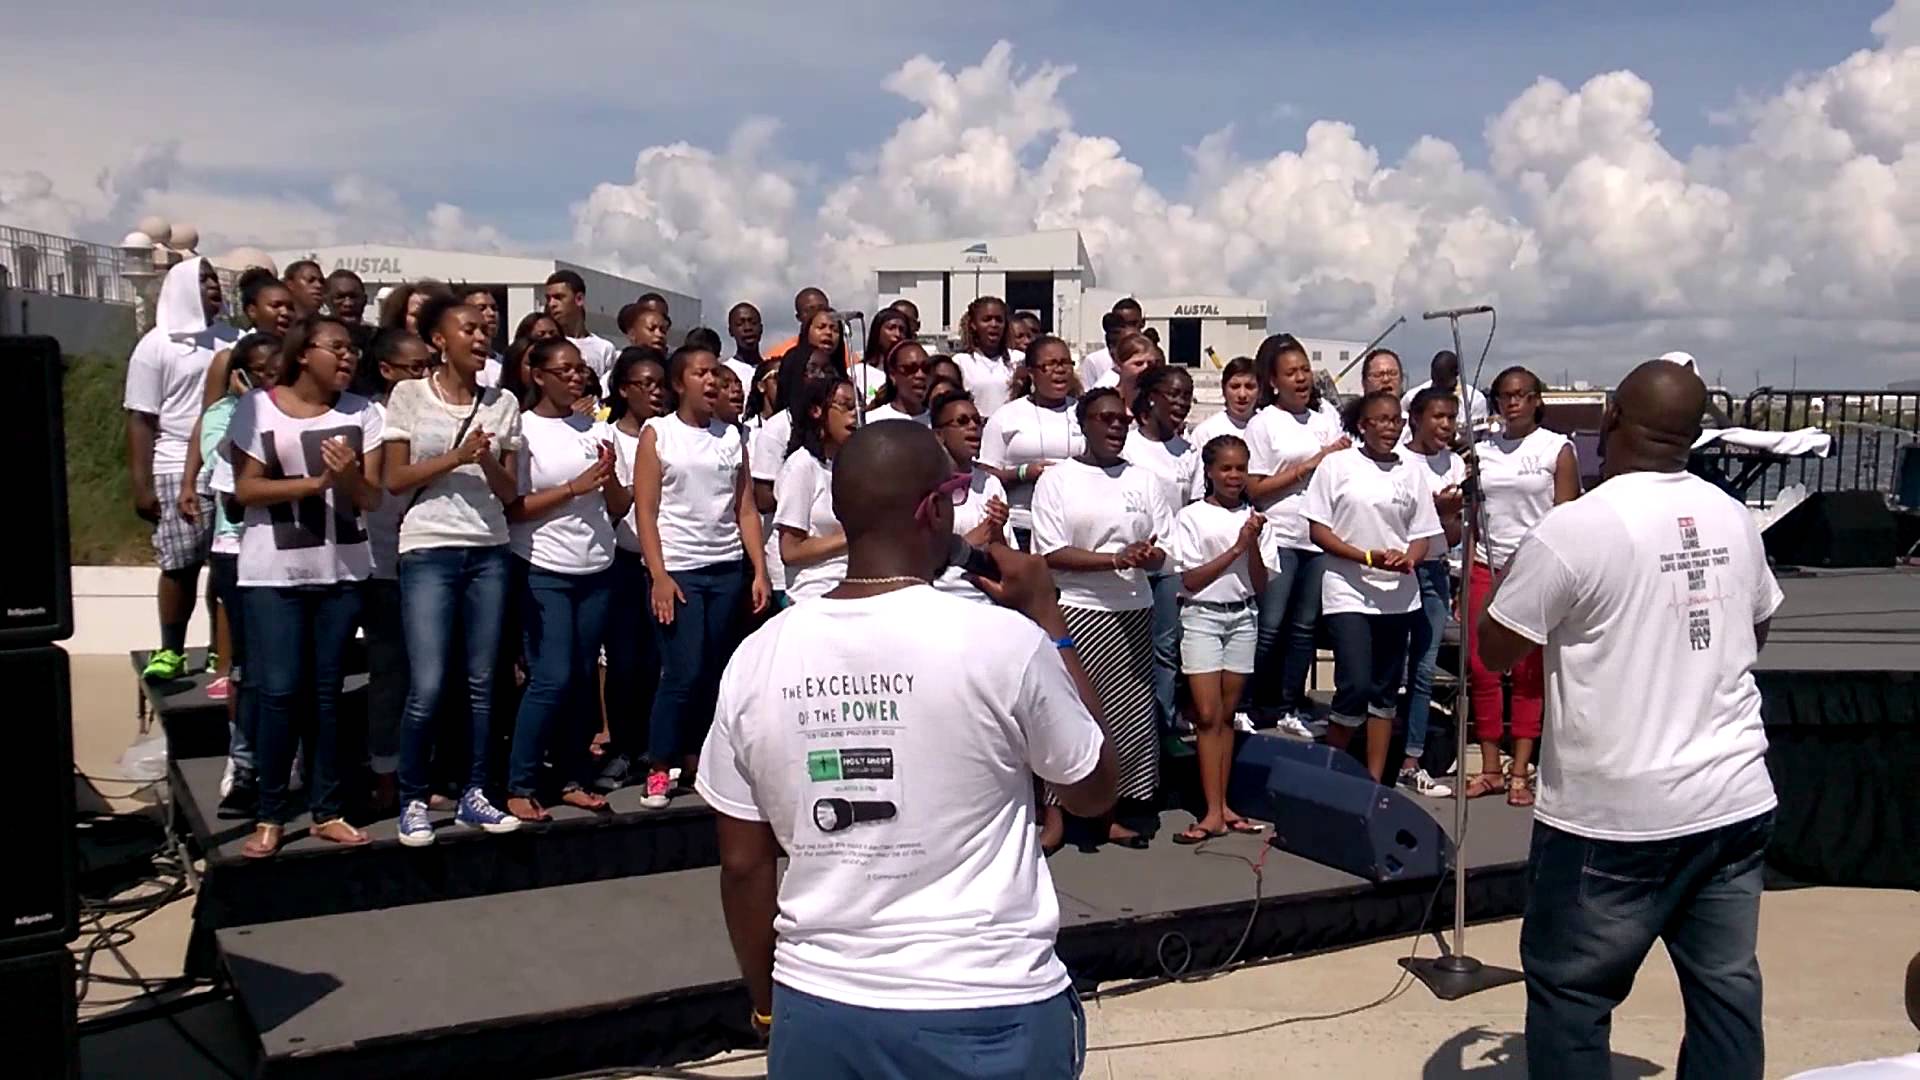 2014 CLGI Outdoor Gospel Youth Choir Concert, Mobile Alabama - YouTube